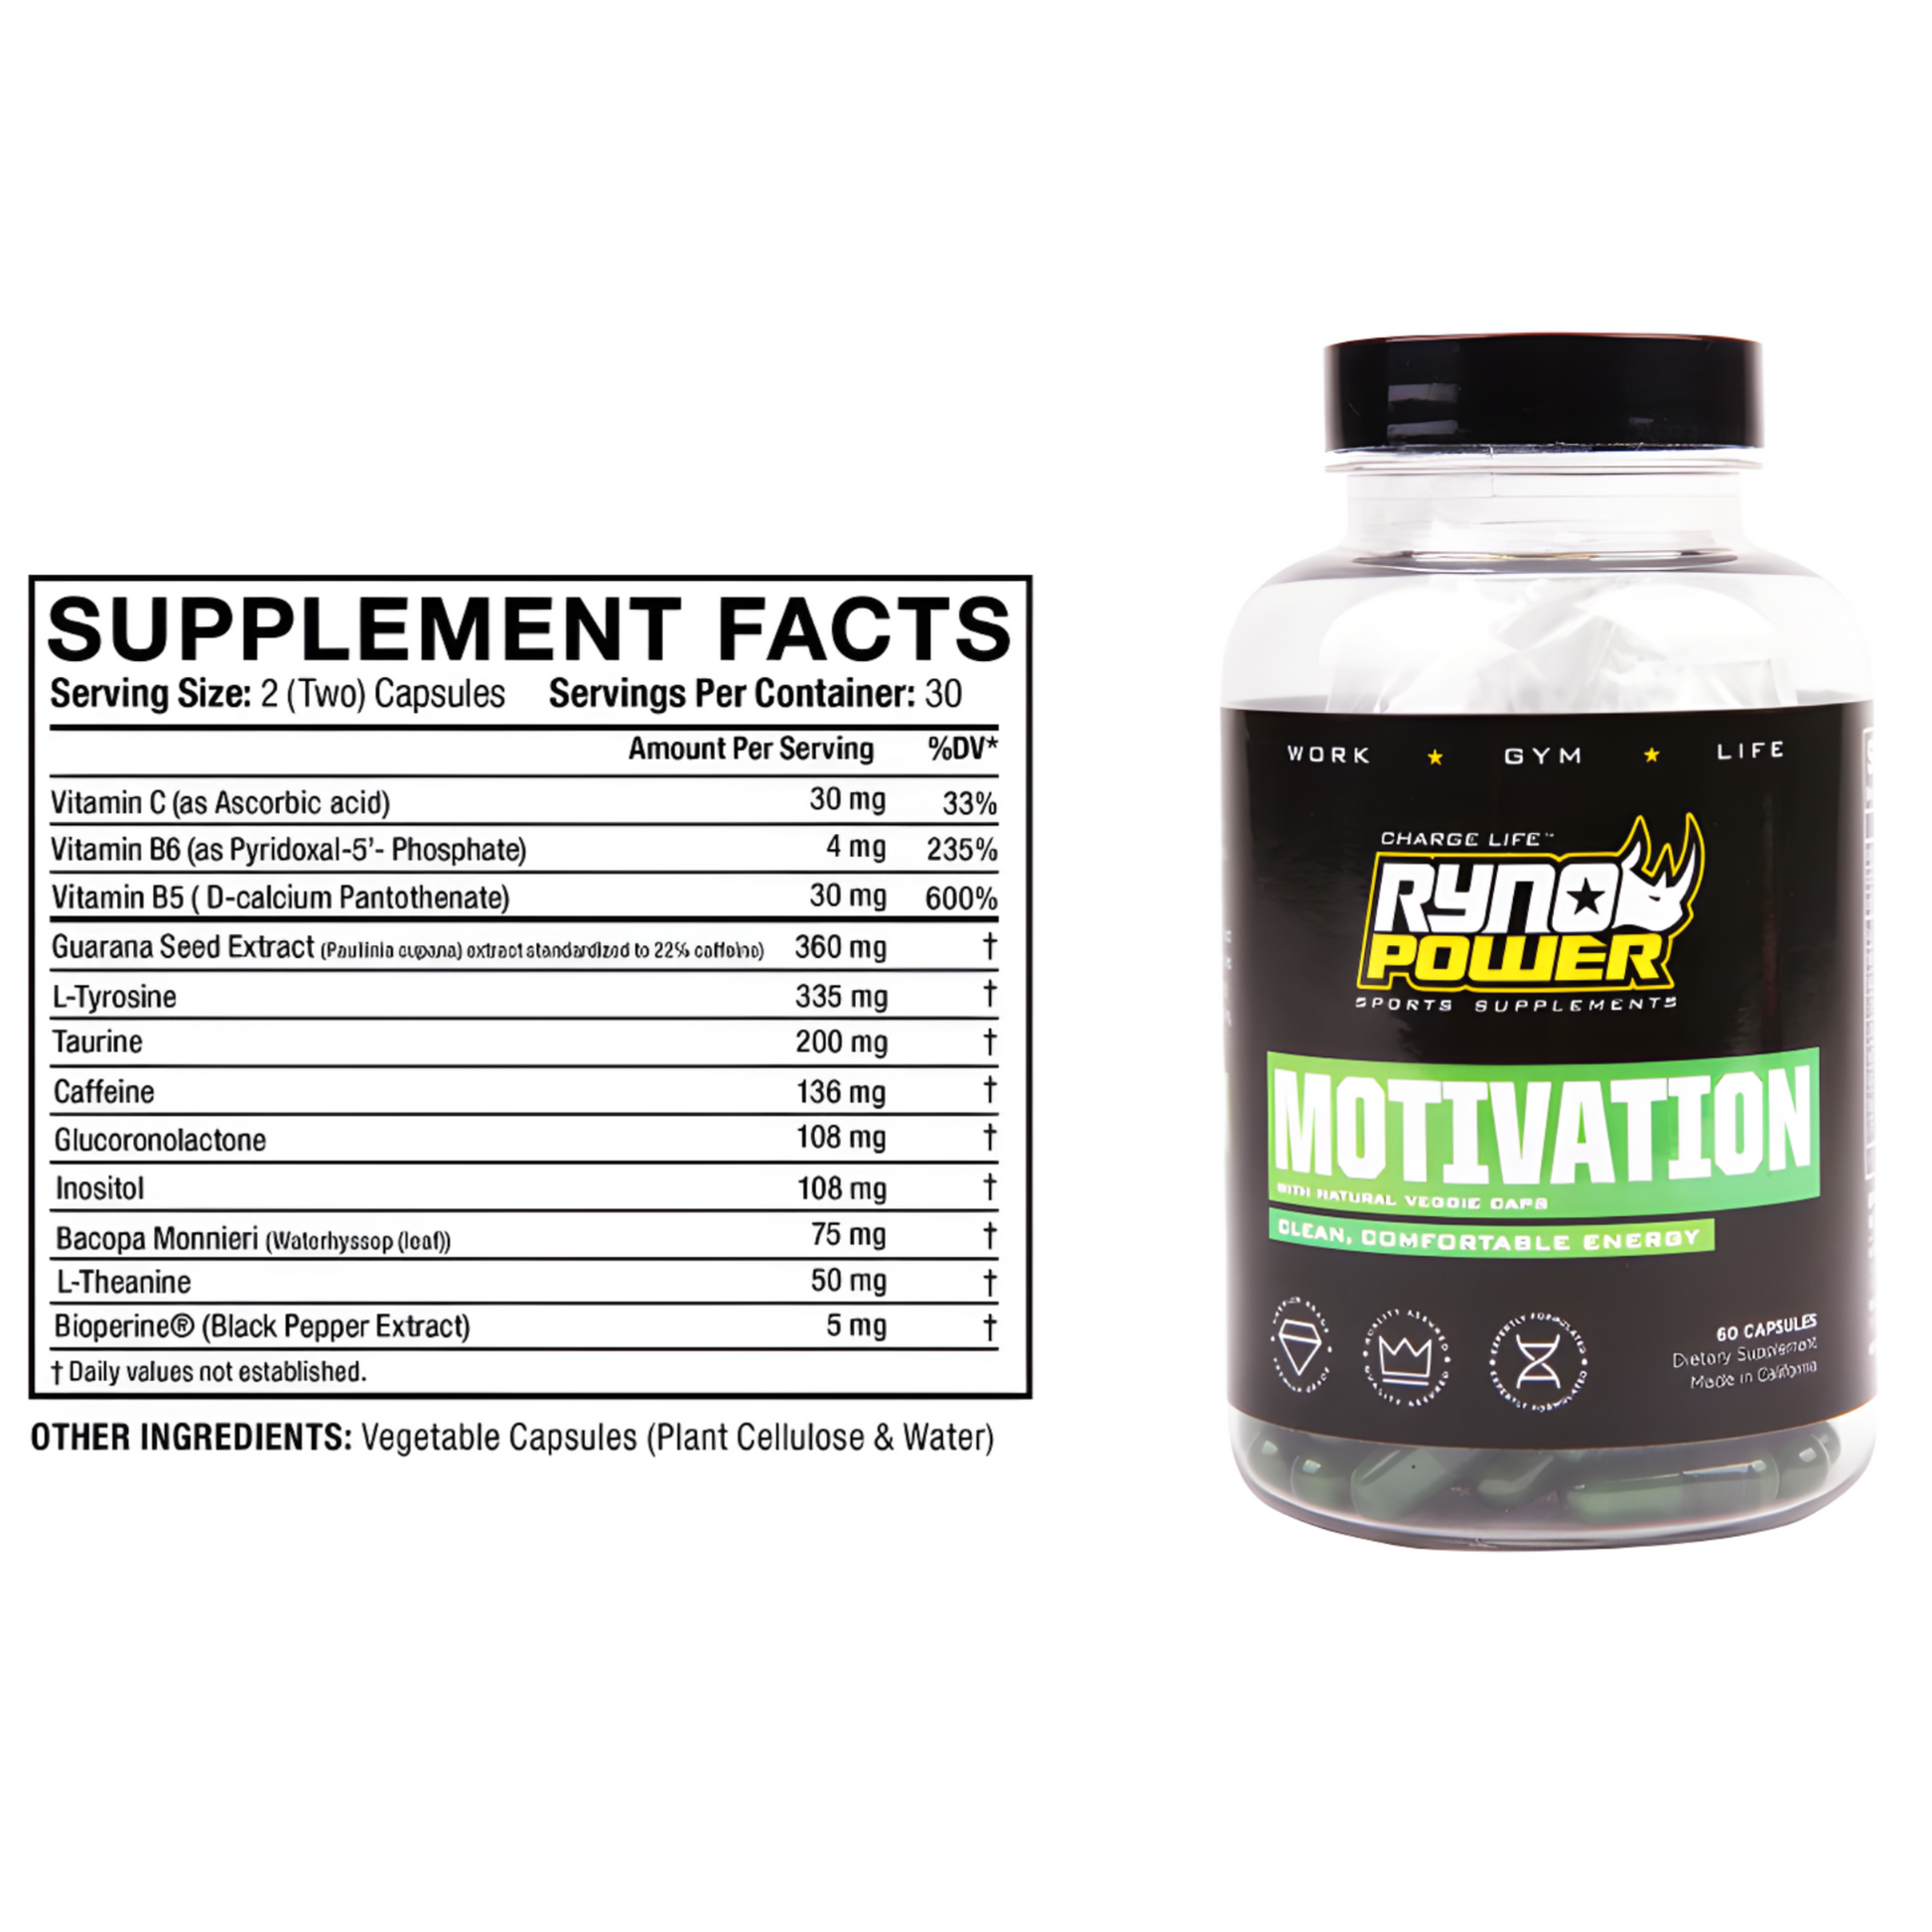 RynoPower Motivation Pre-Workout Supplement Main Package Supplement Facts